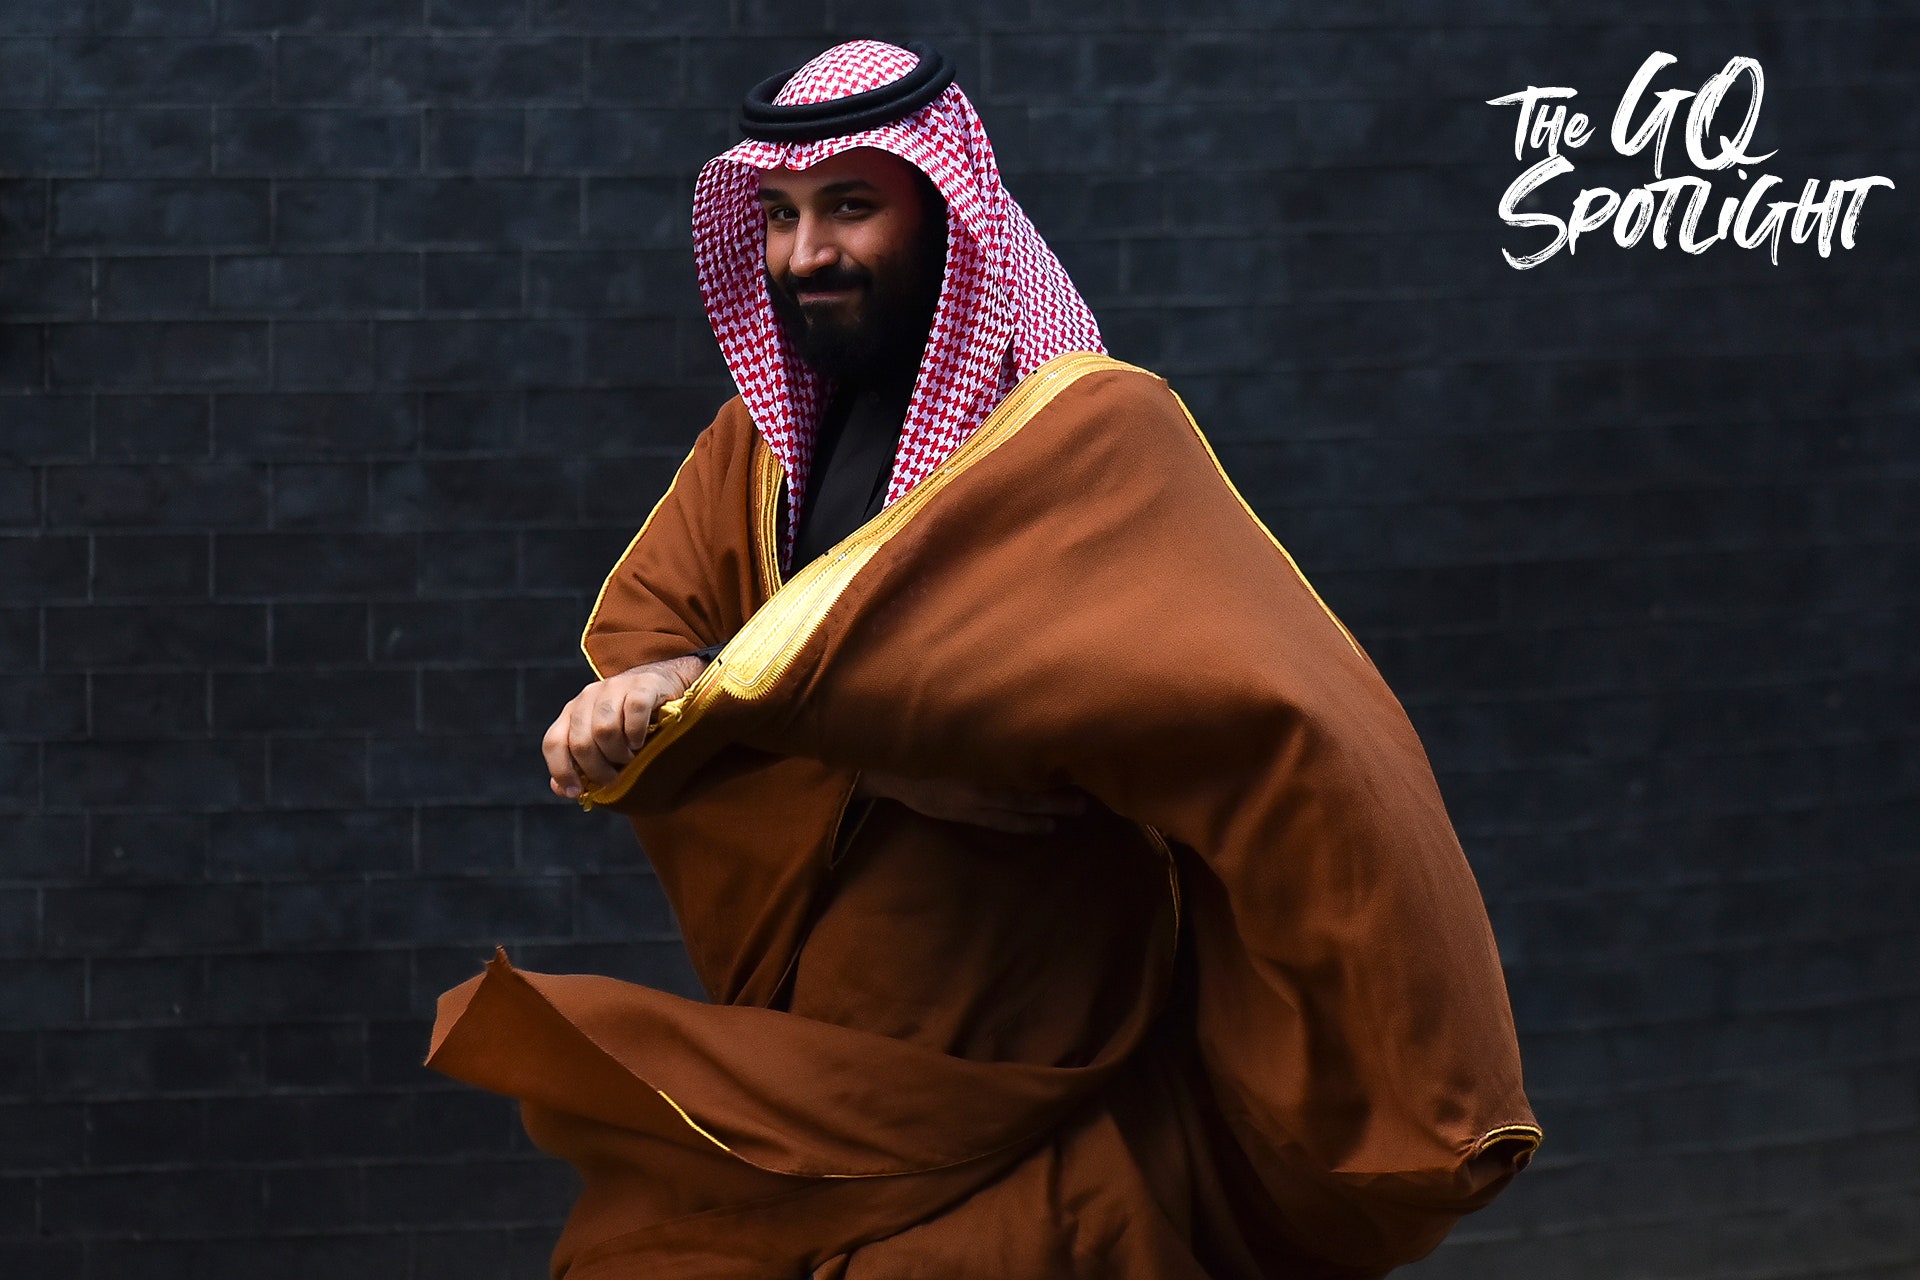 Crown prince Mohammed Bin Salman: Inside the stricken court